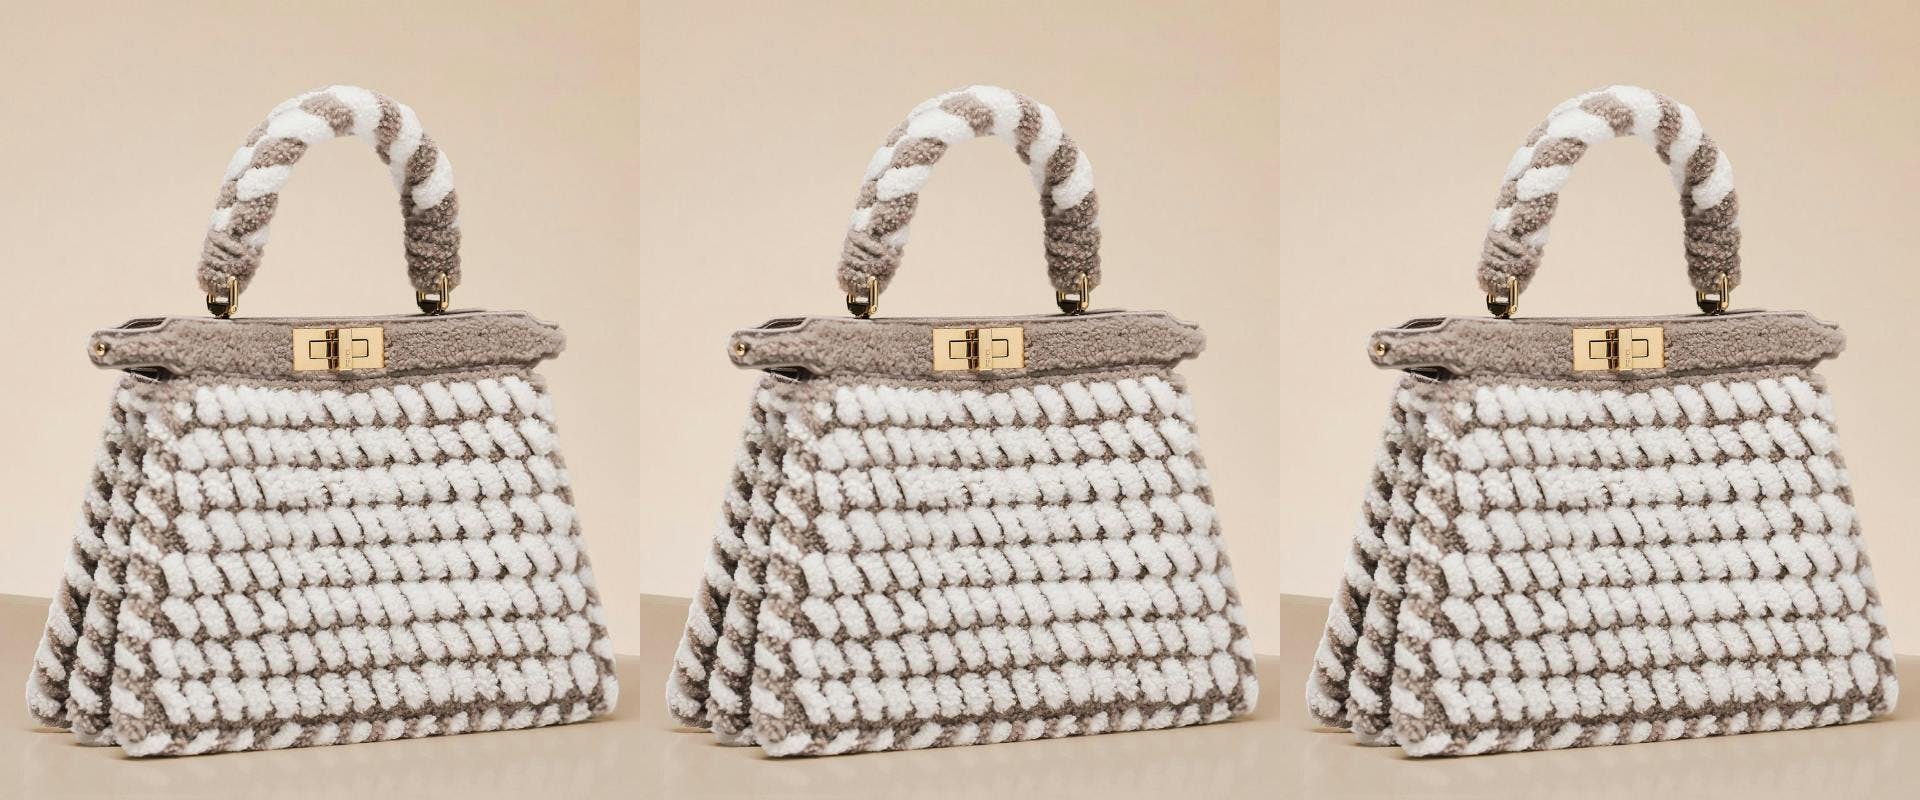 accessories bag handbag purse woven